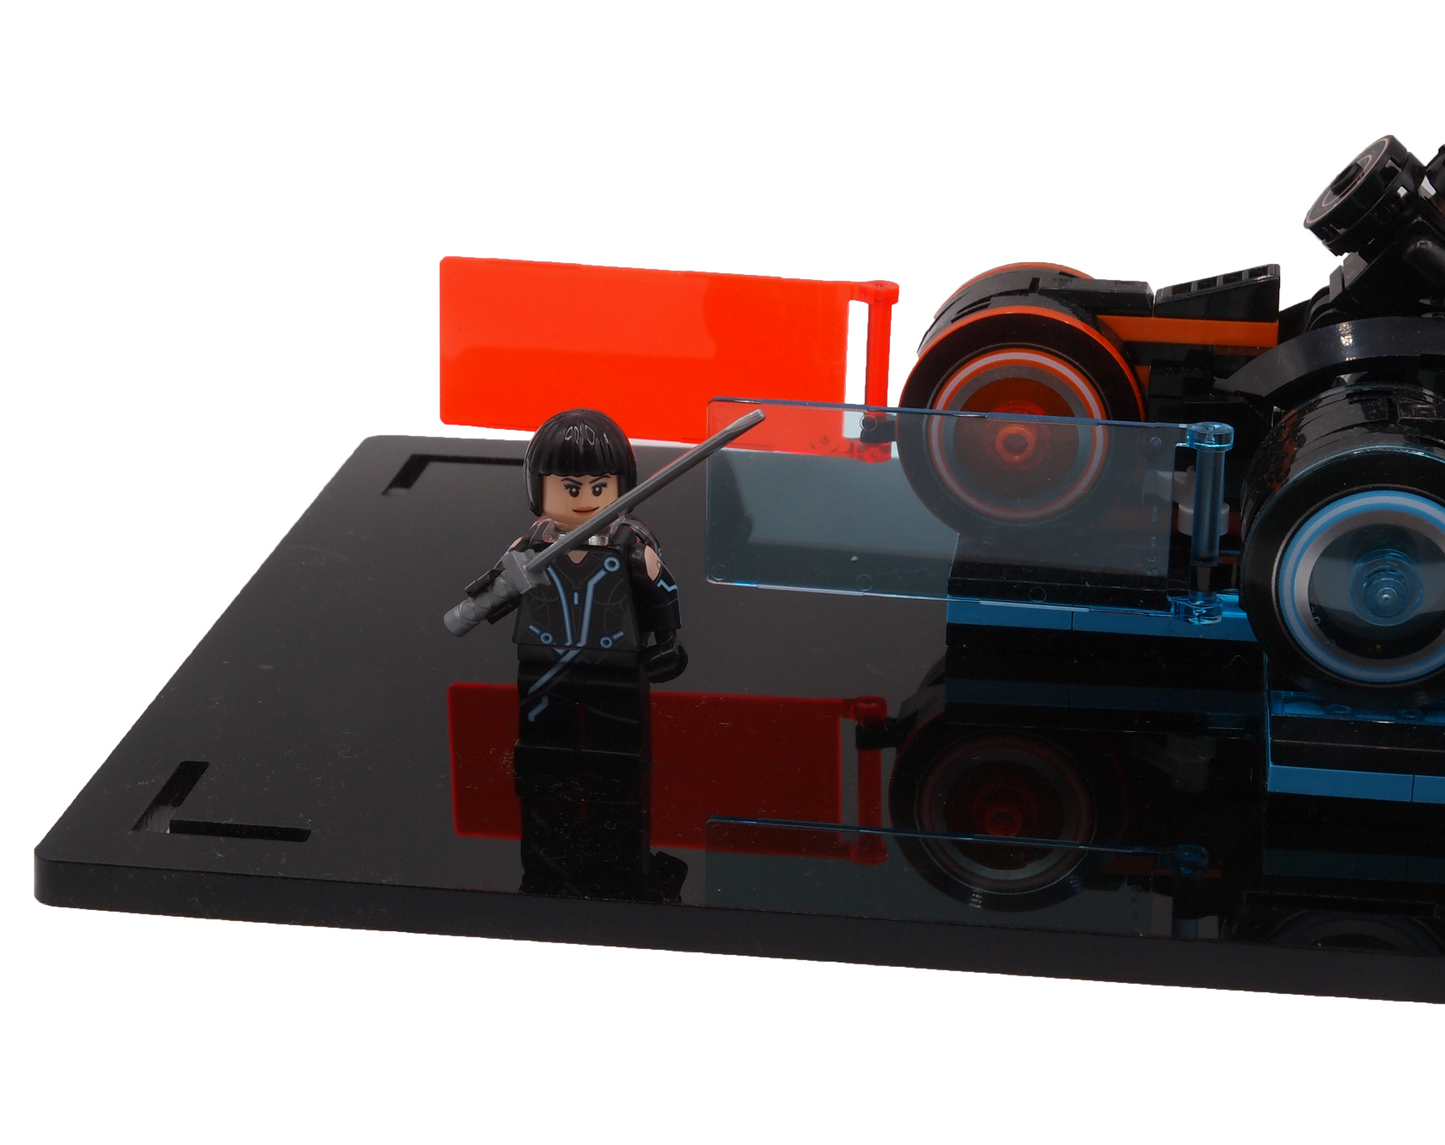 Display Case for LEGO TRON Legacy (21314) Set